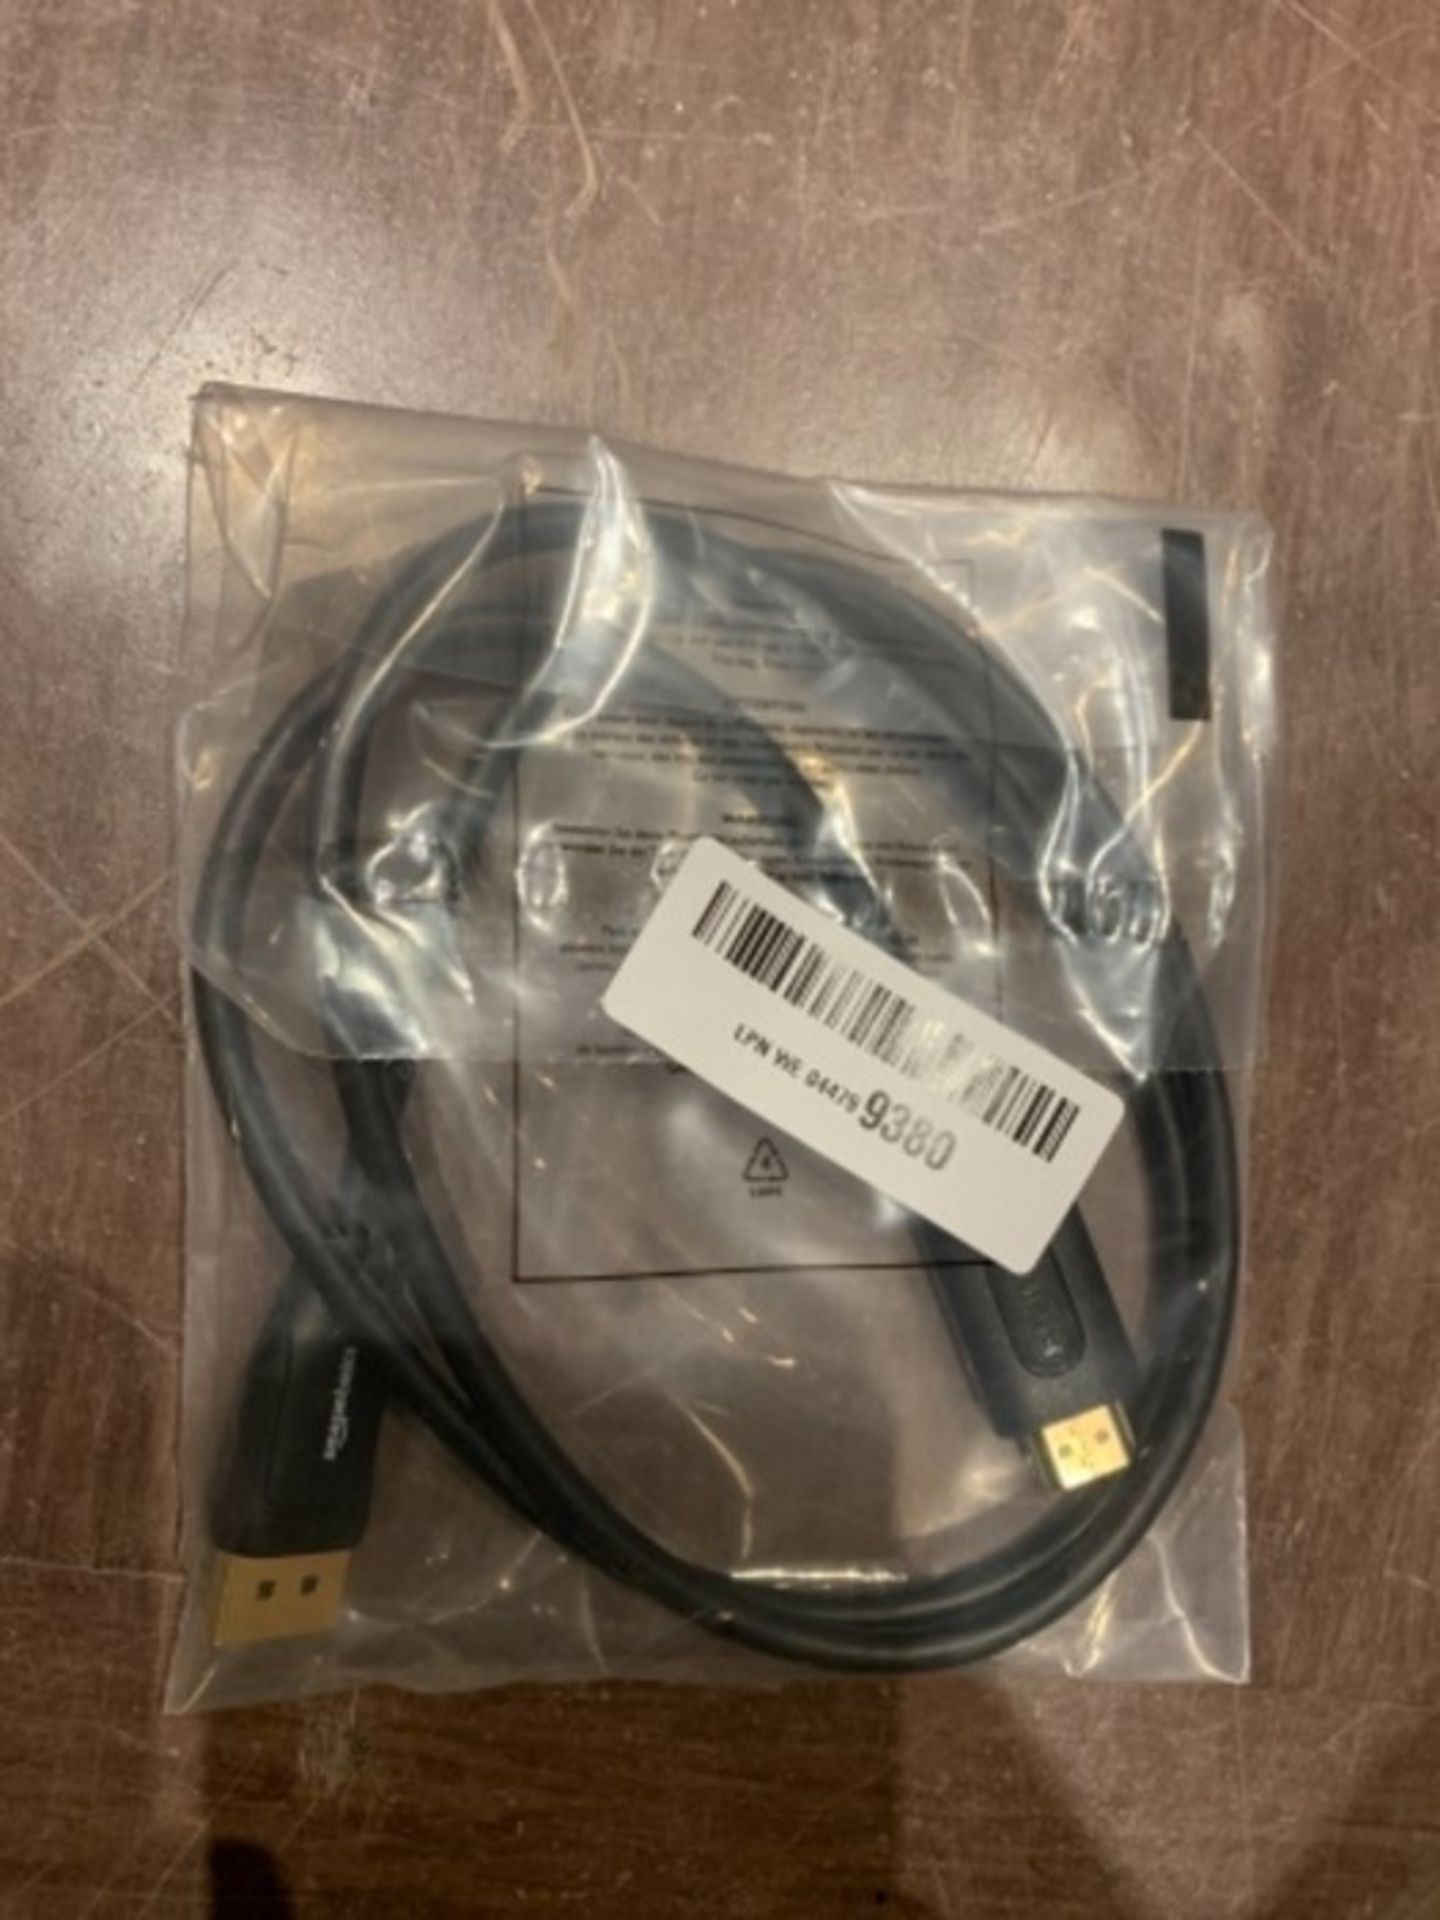 Amazon Basics DisplayPort to HDMI Cable - 0.9 m - Image 2 of 2